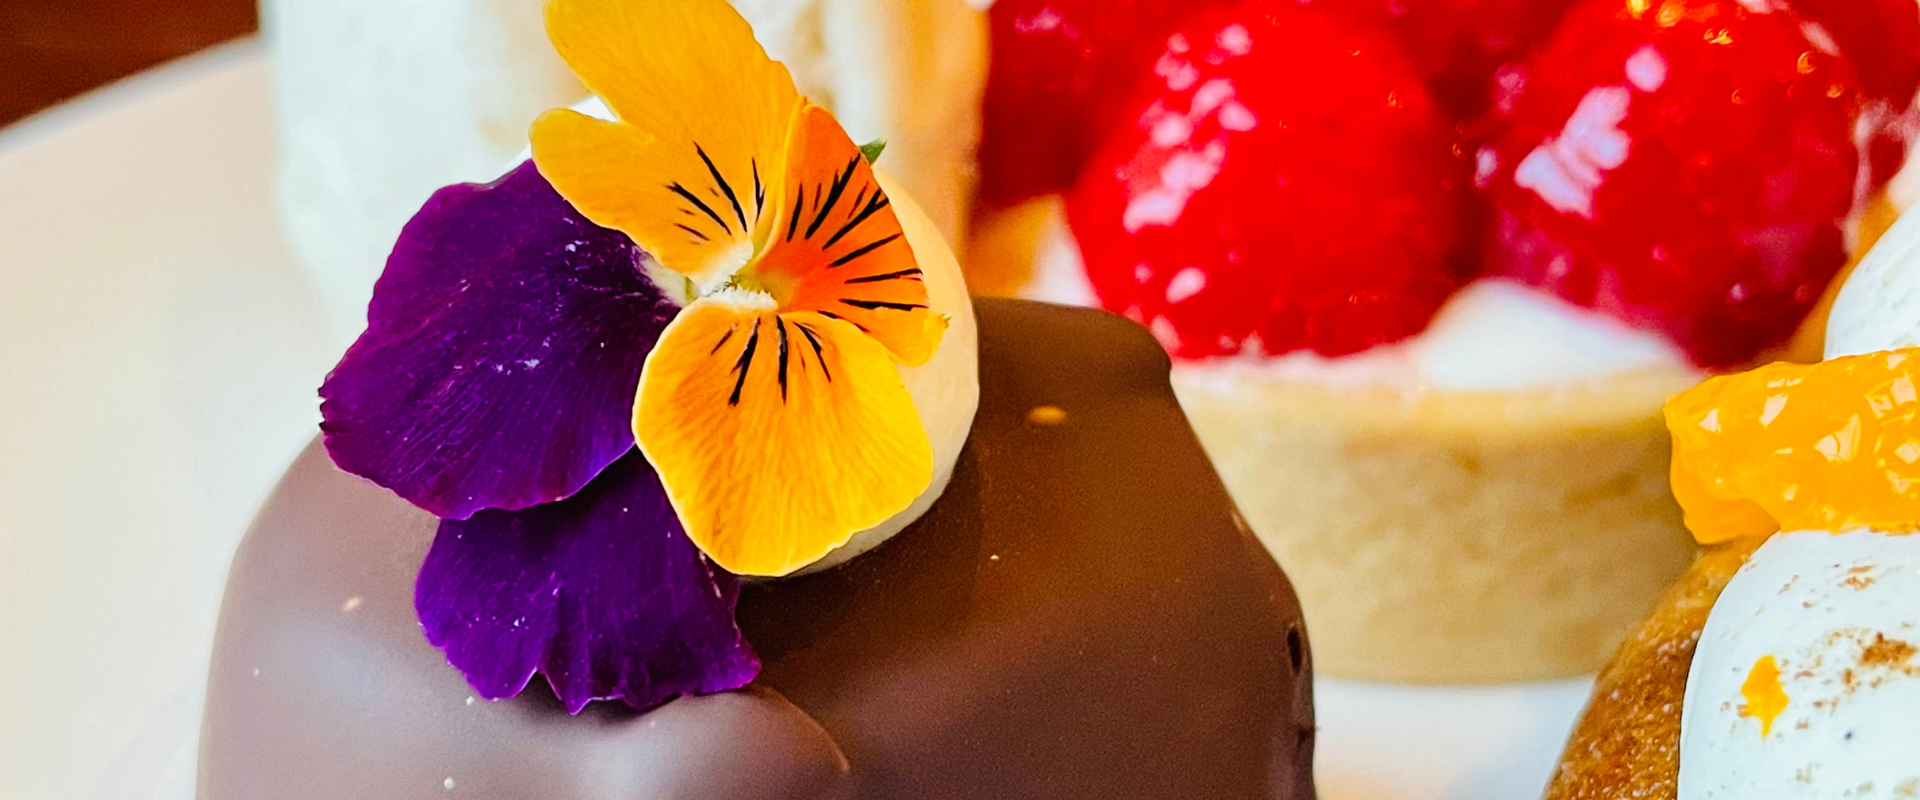 Image of chocolate treat next to a raspberry tart